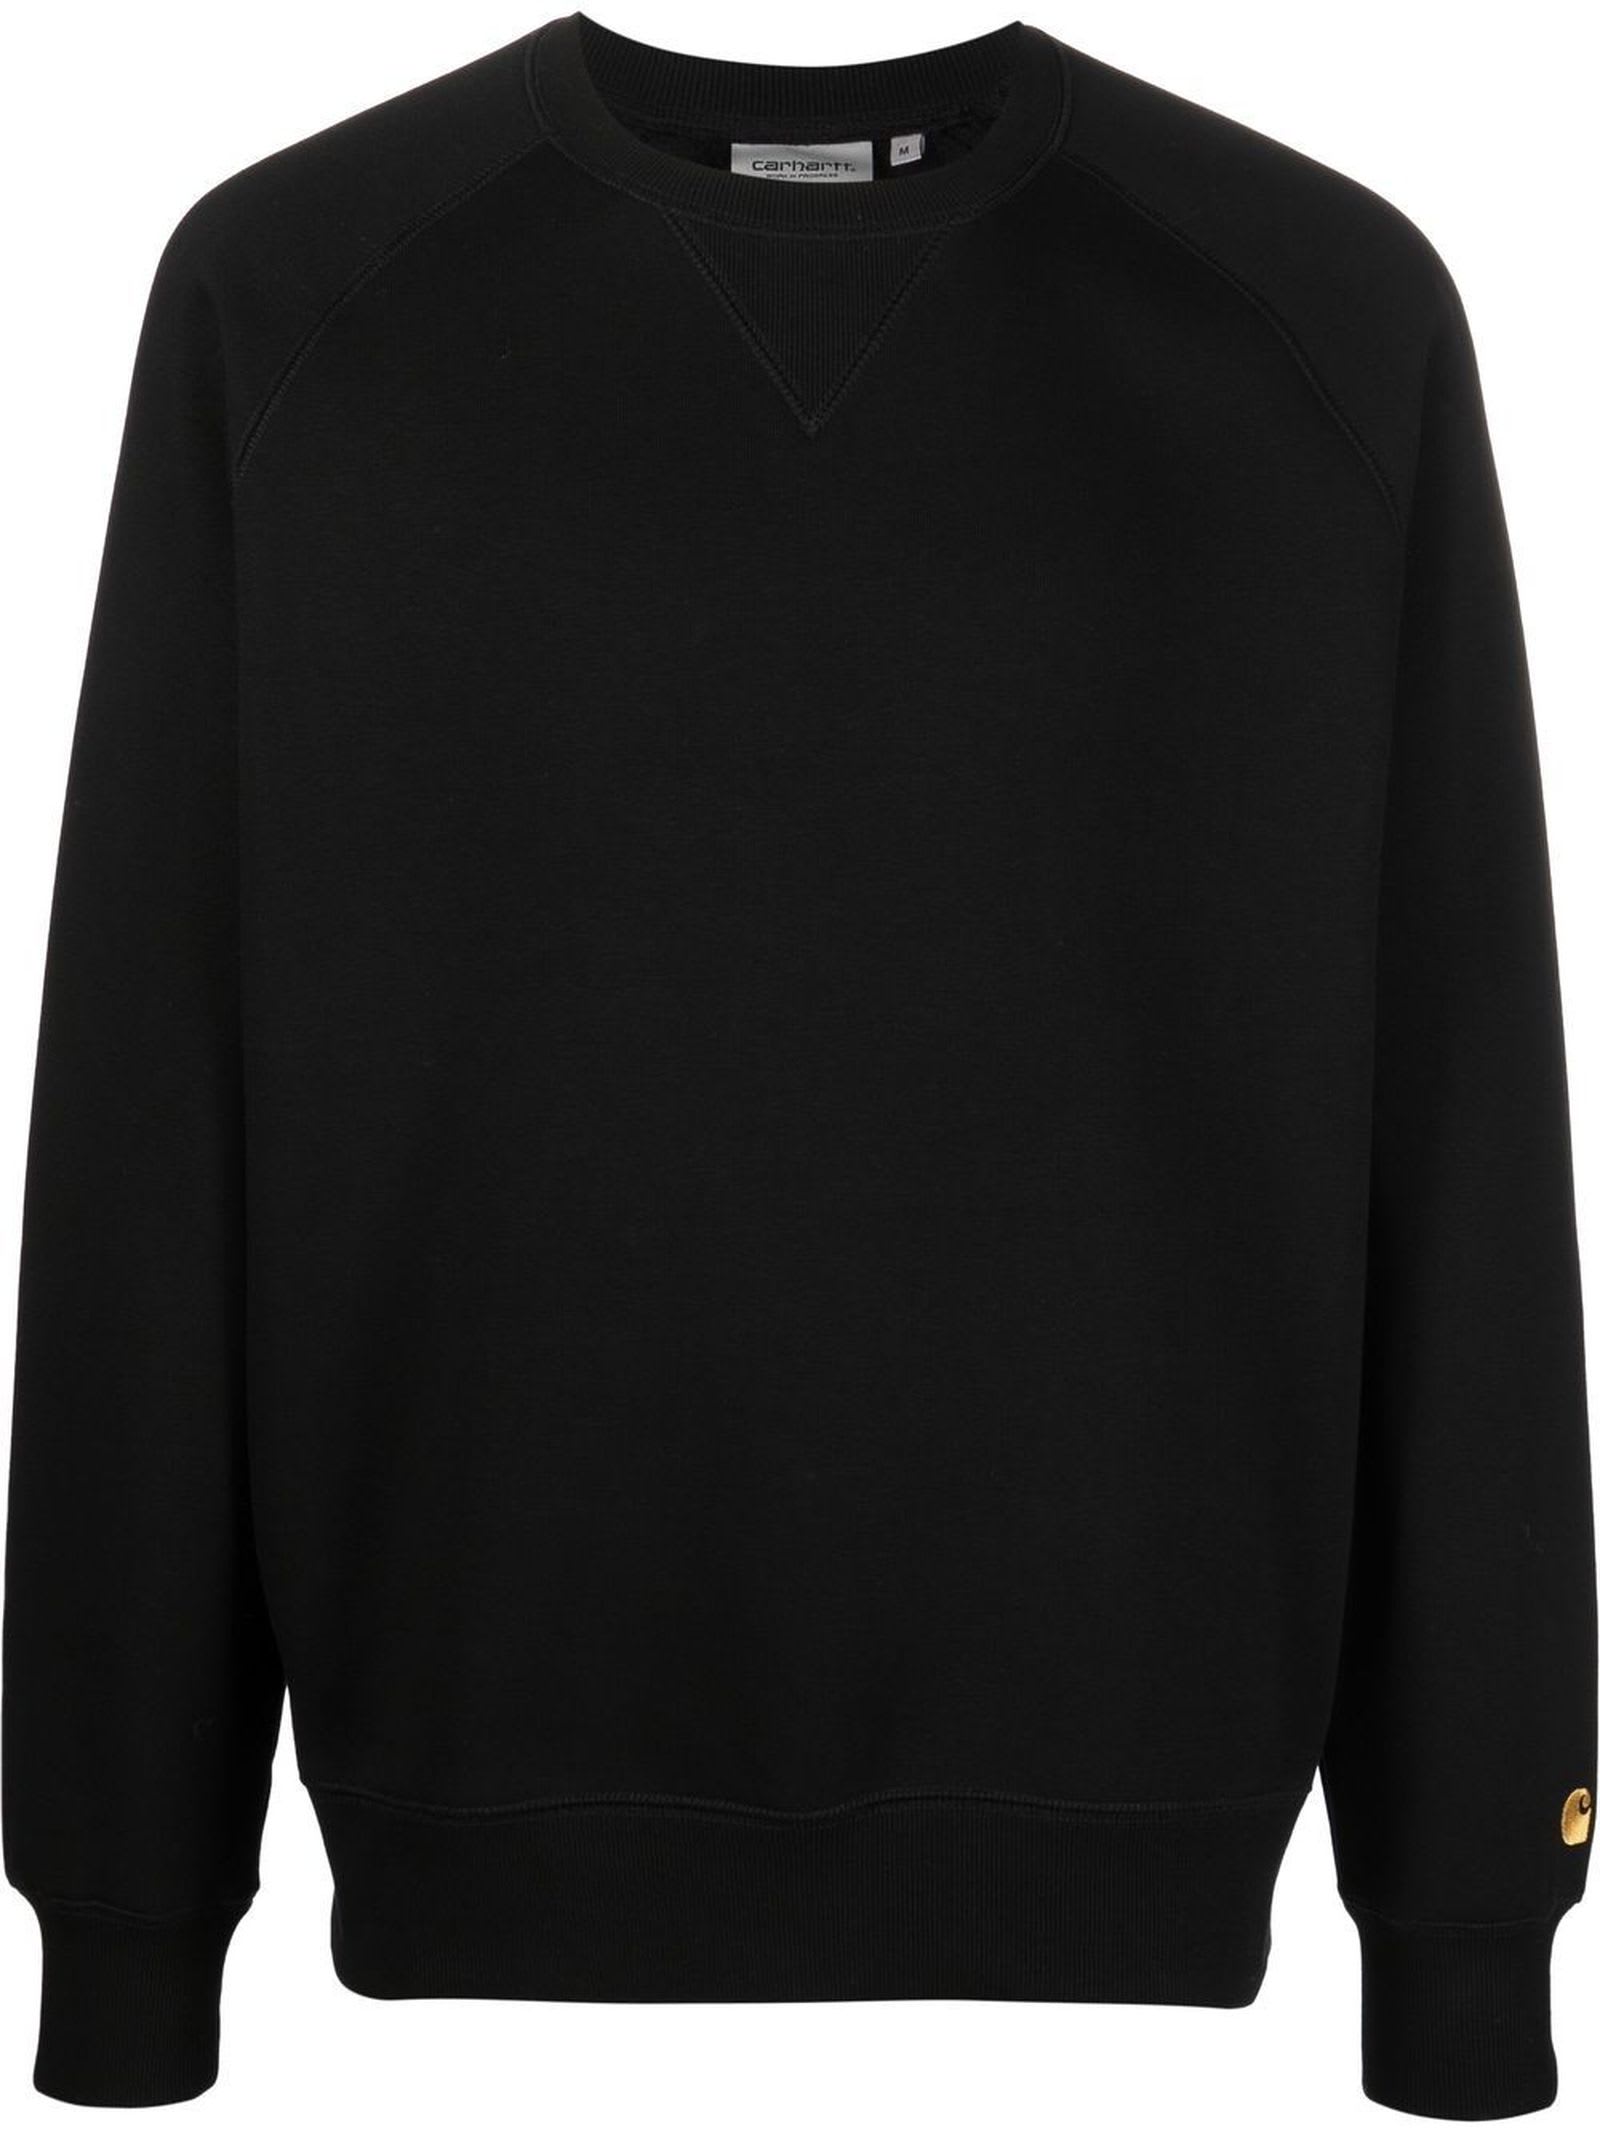 Carhartt Jet Black Cotton Sweatshirt